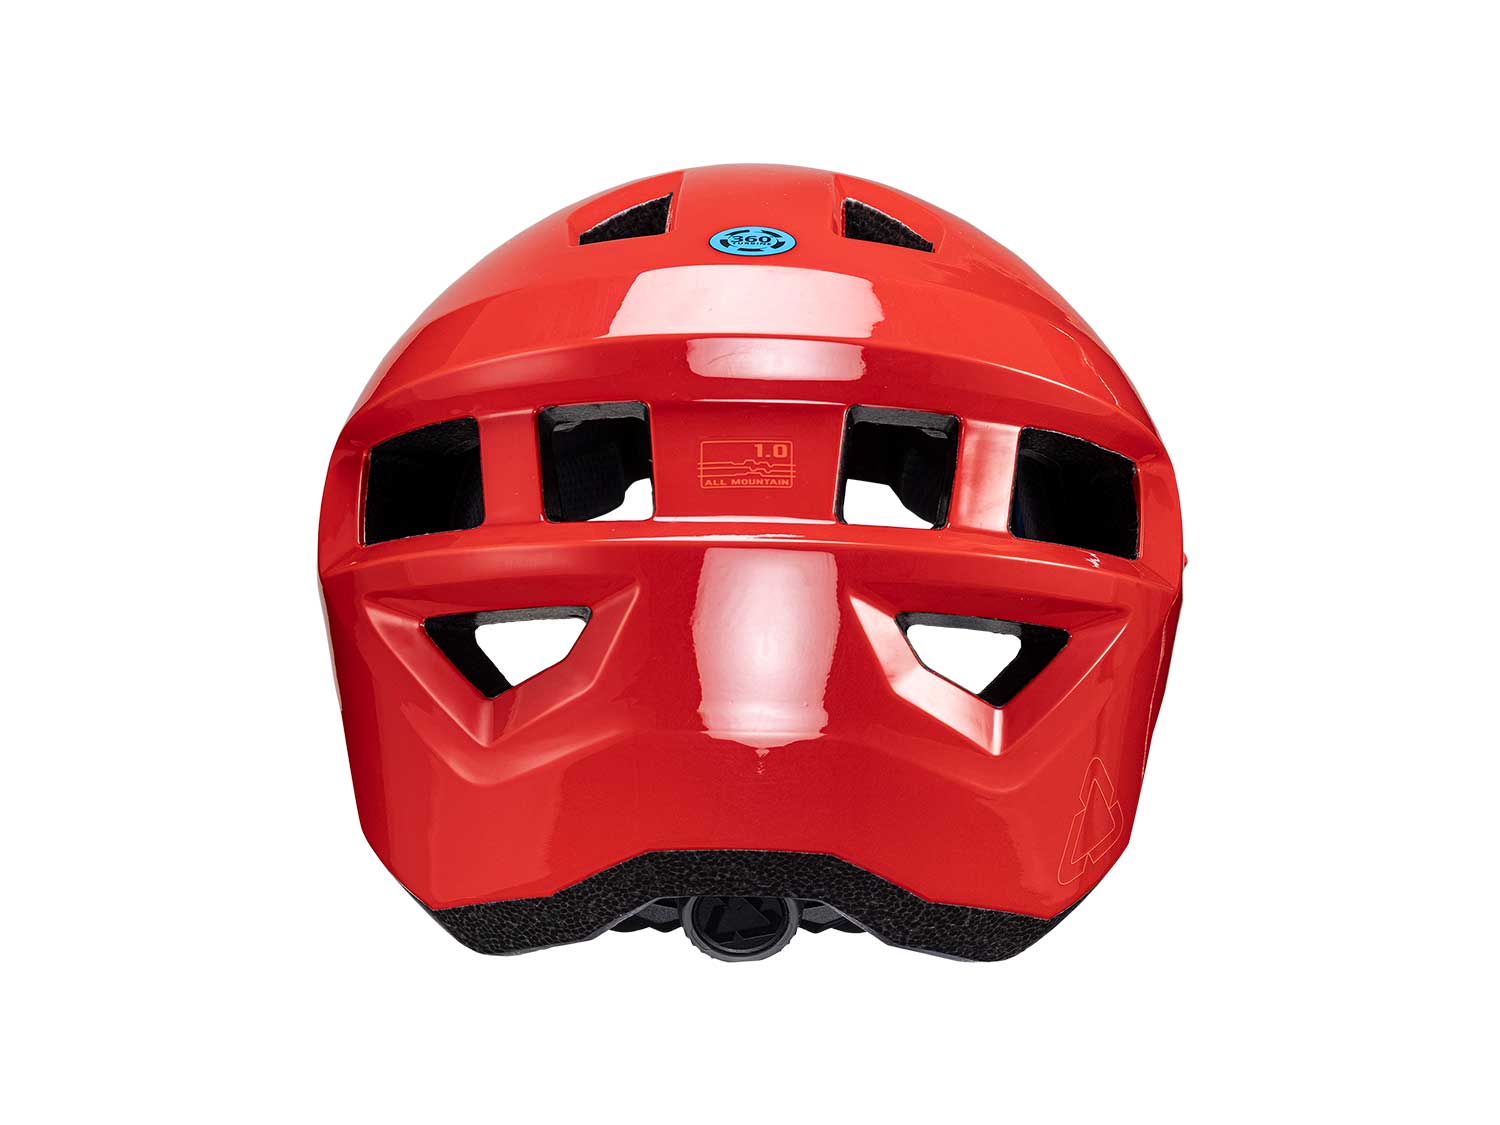 Leatt Helmet MTB All Mountain 1.0